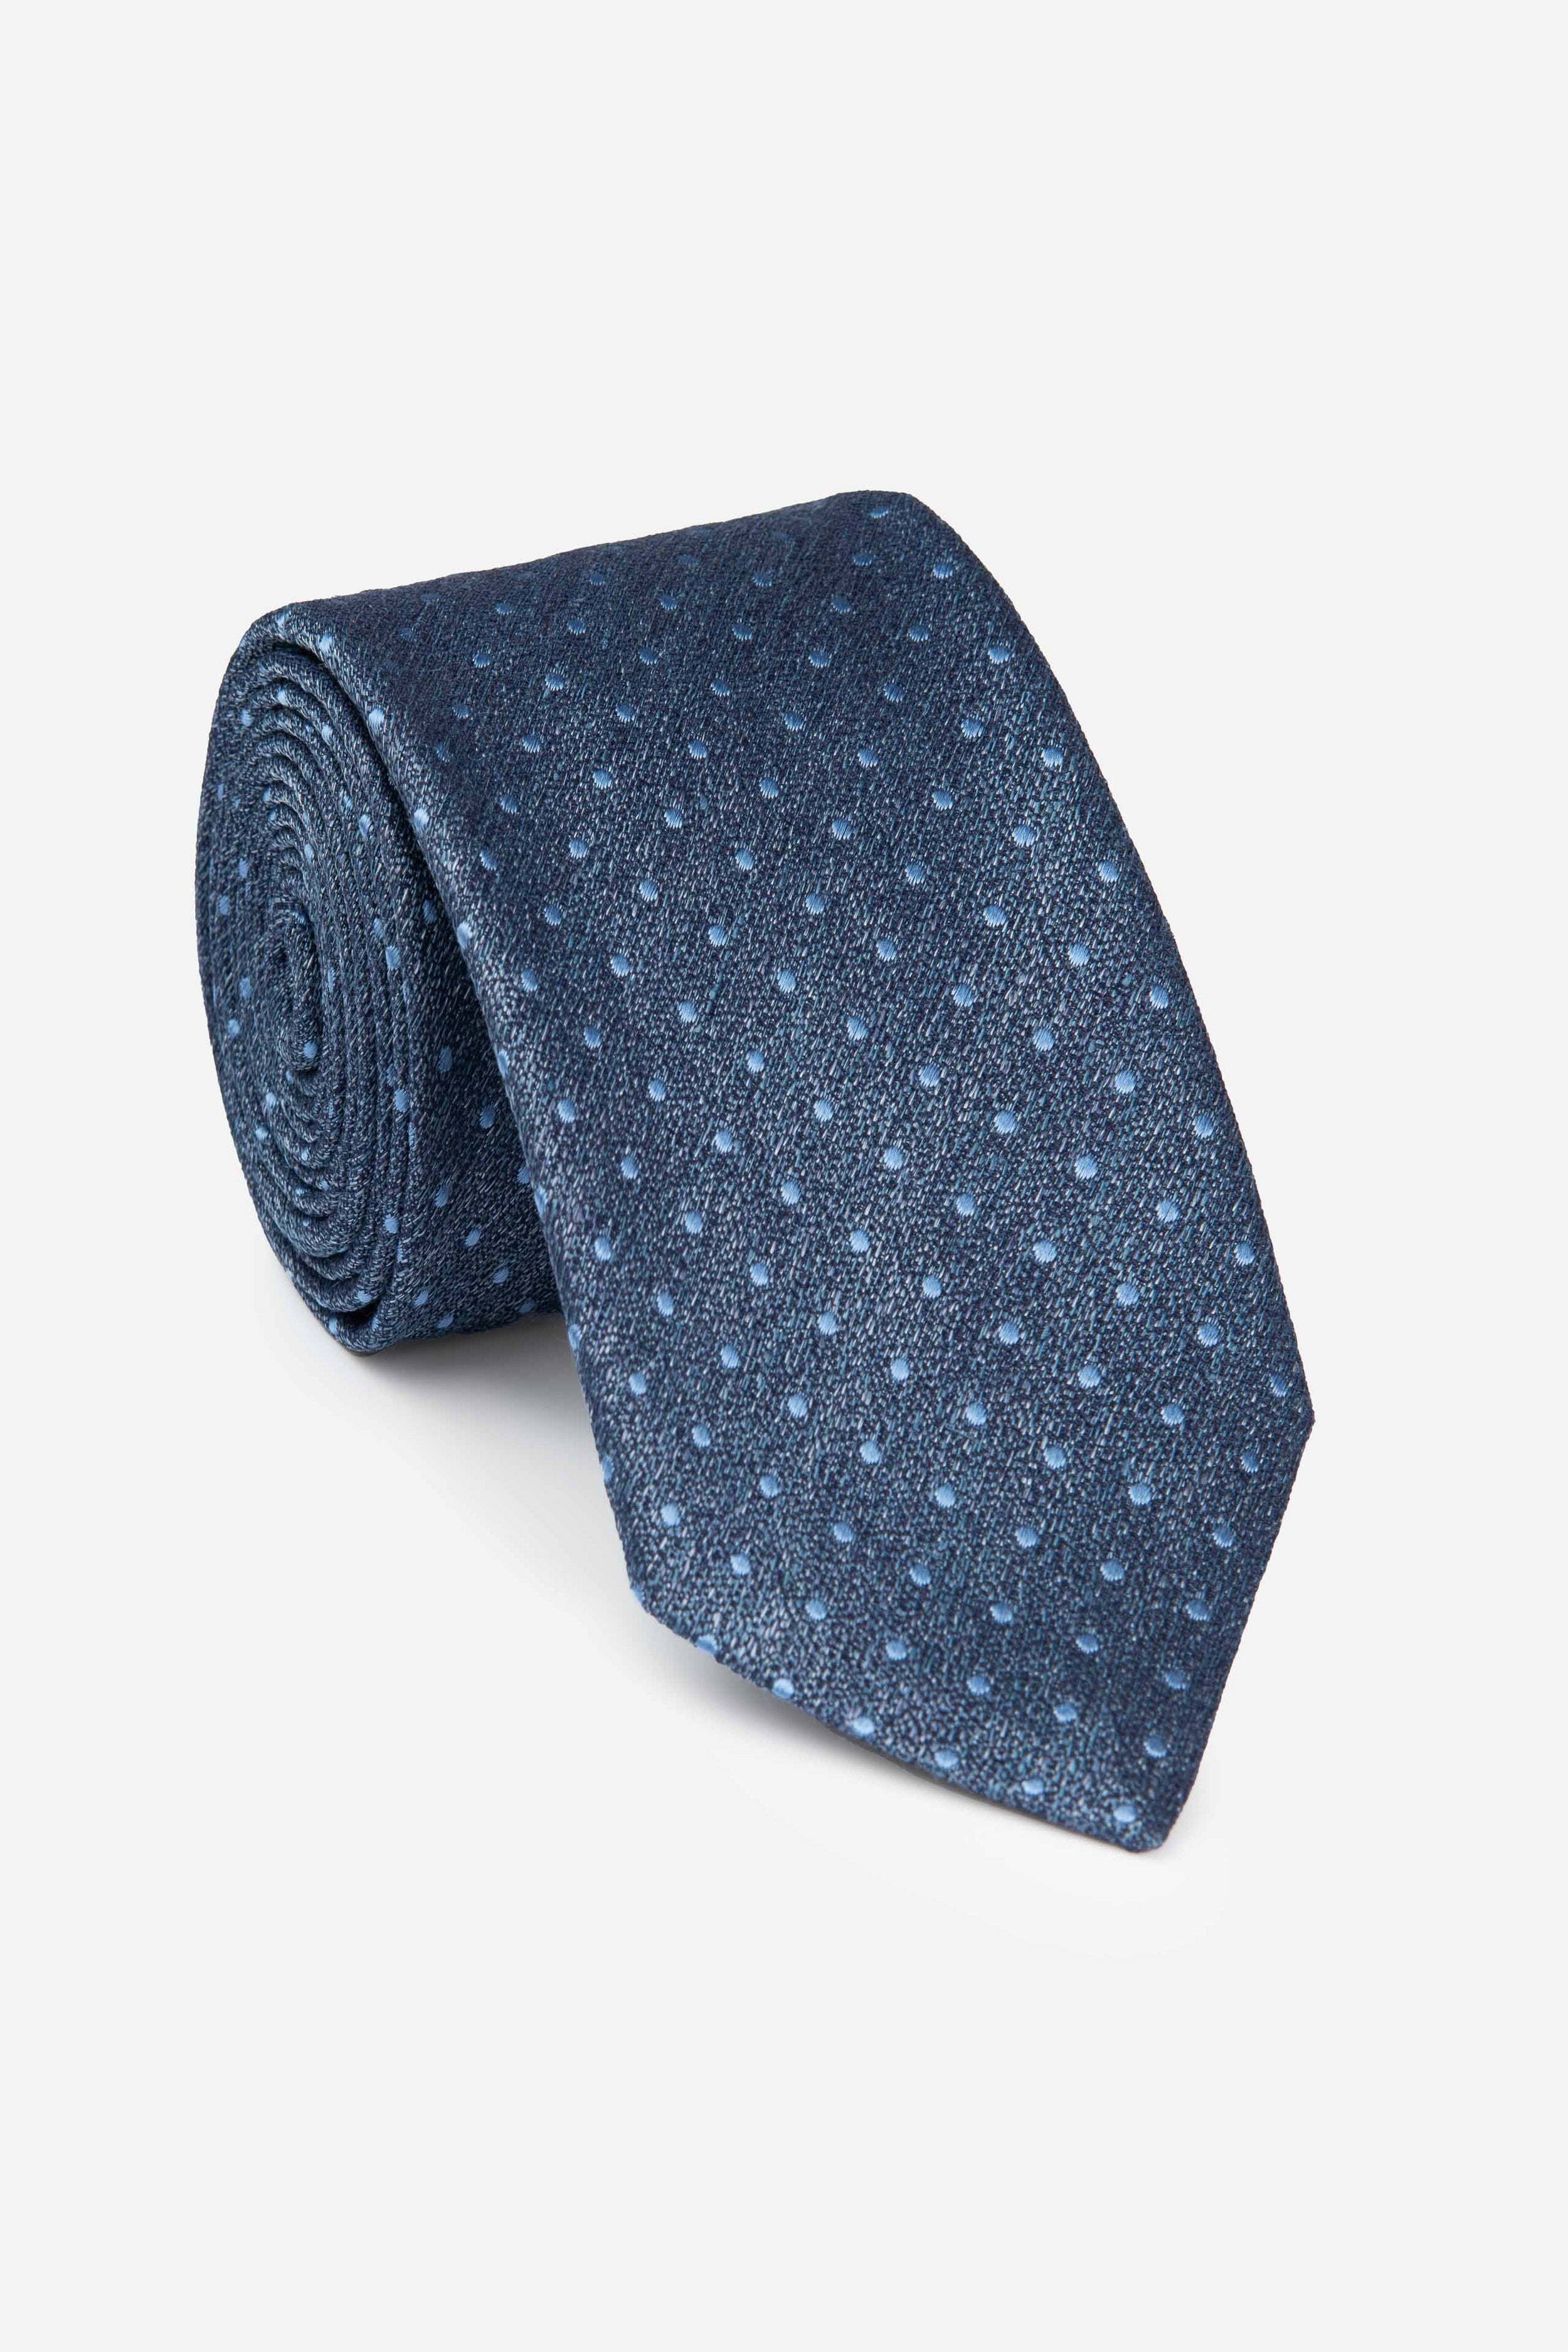 Cravatta a pois blu - POIS BLU